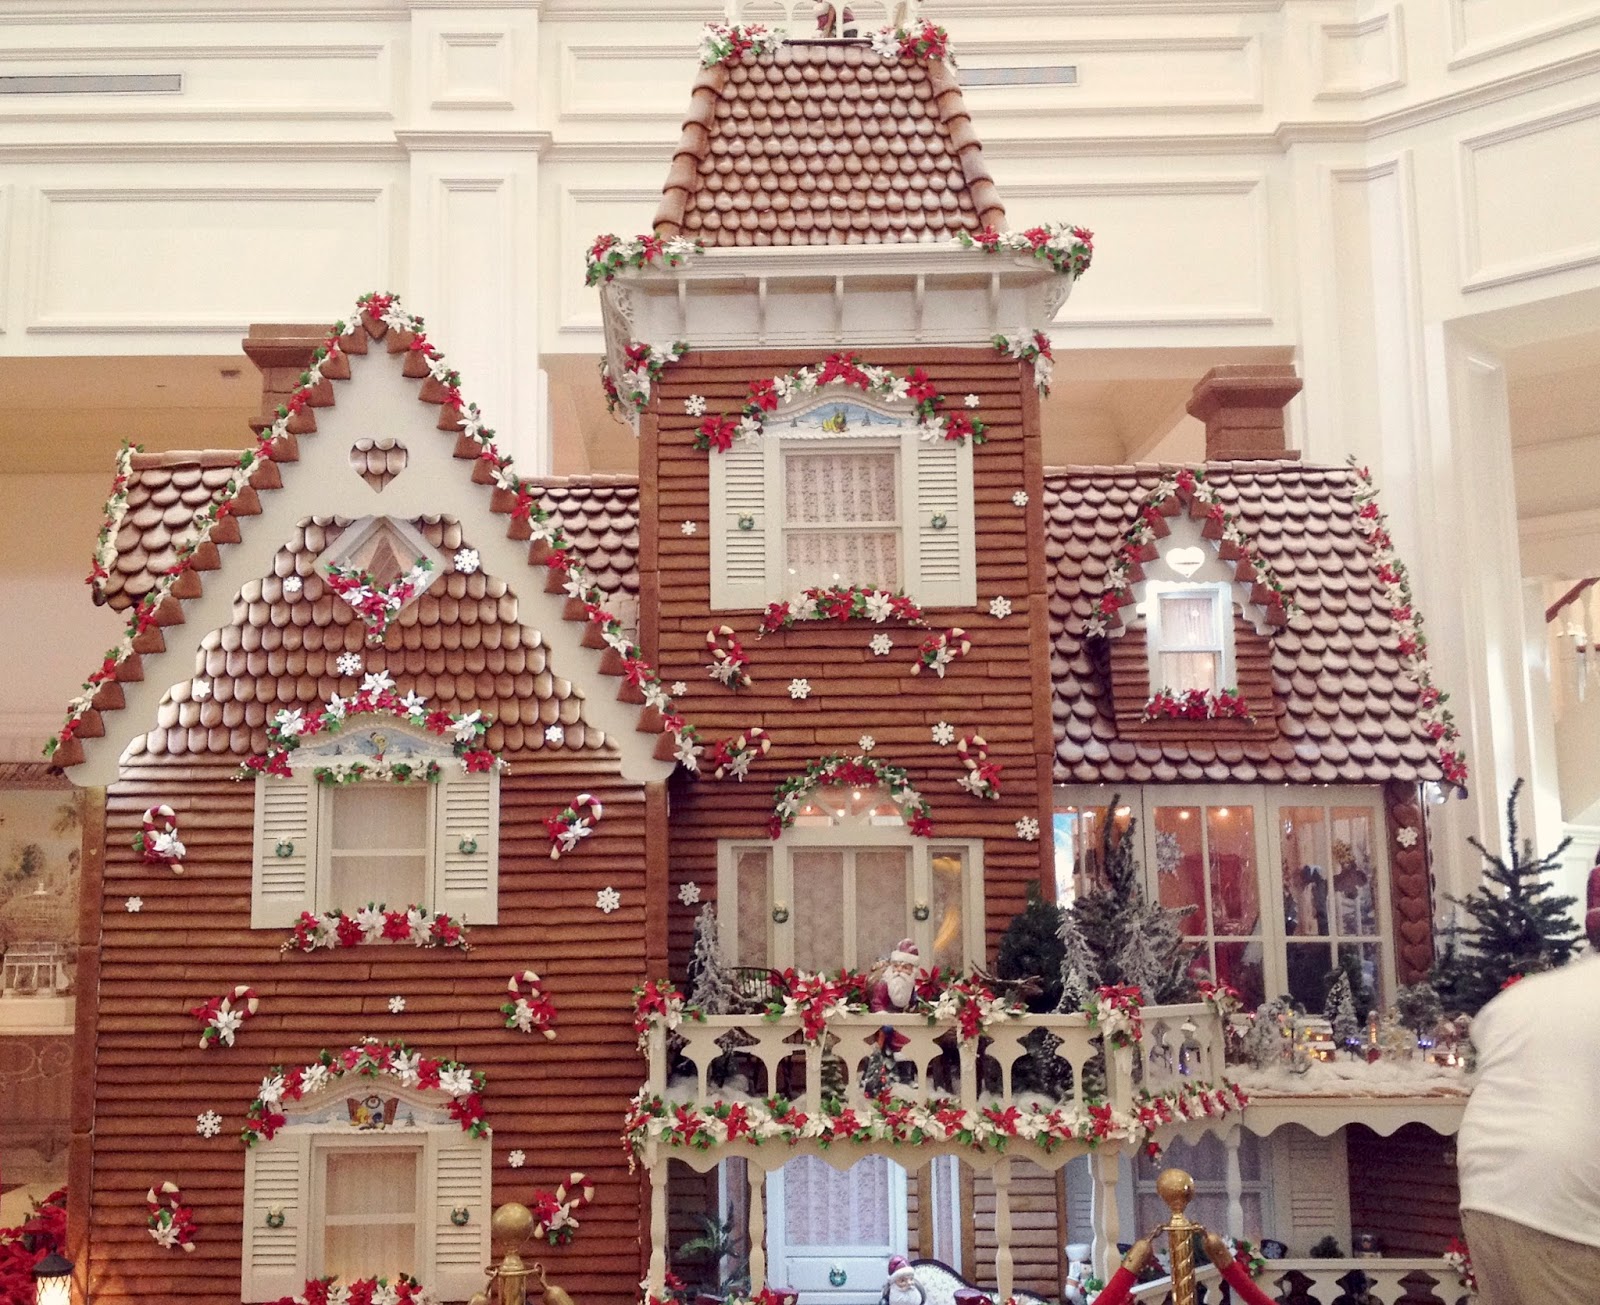 Gingerbread house at Disney's Grand Floridian Resort